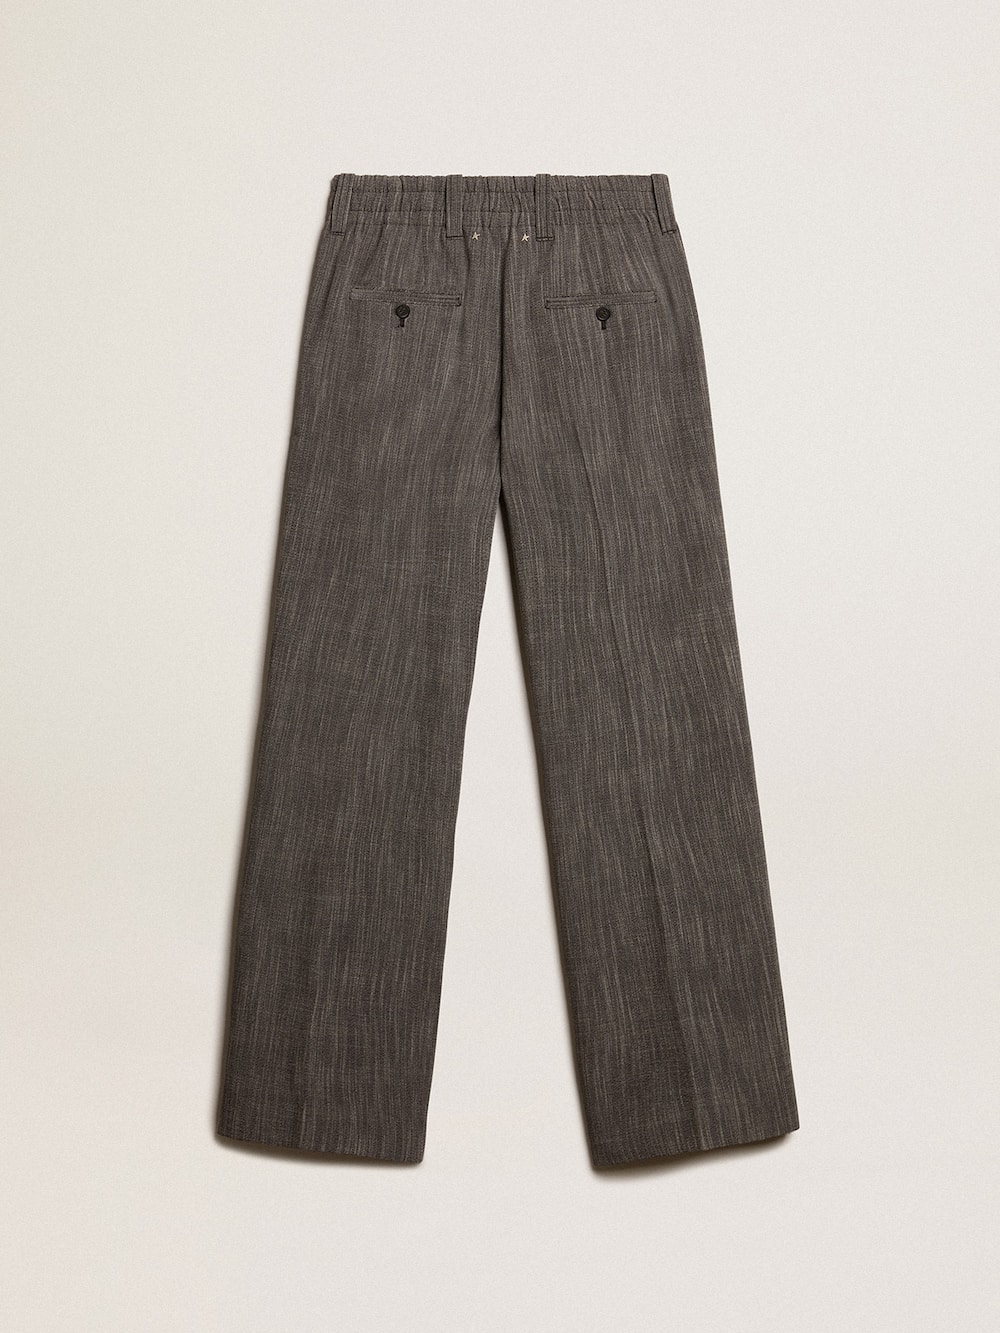 Golden Goose - Women’s high-waisted pants in gray melange wool blend in 